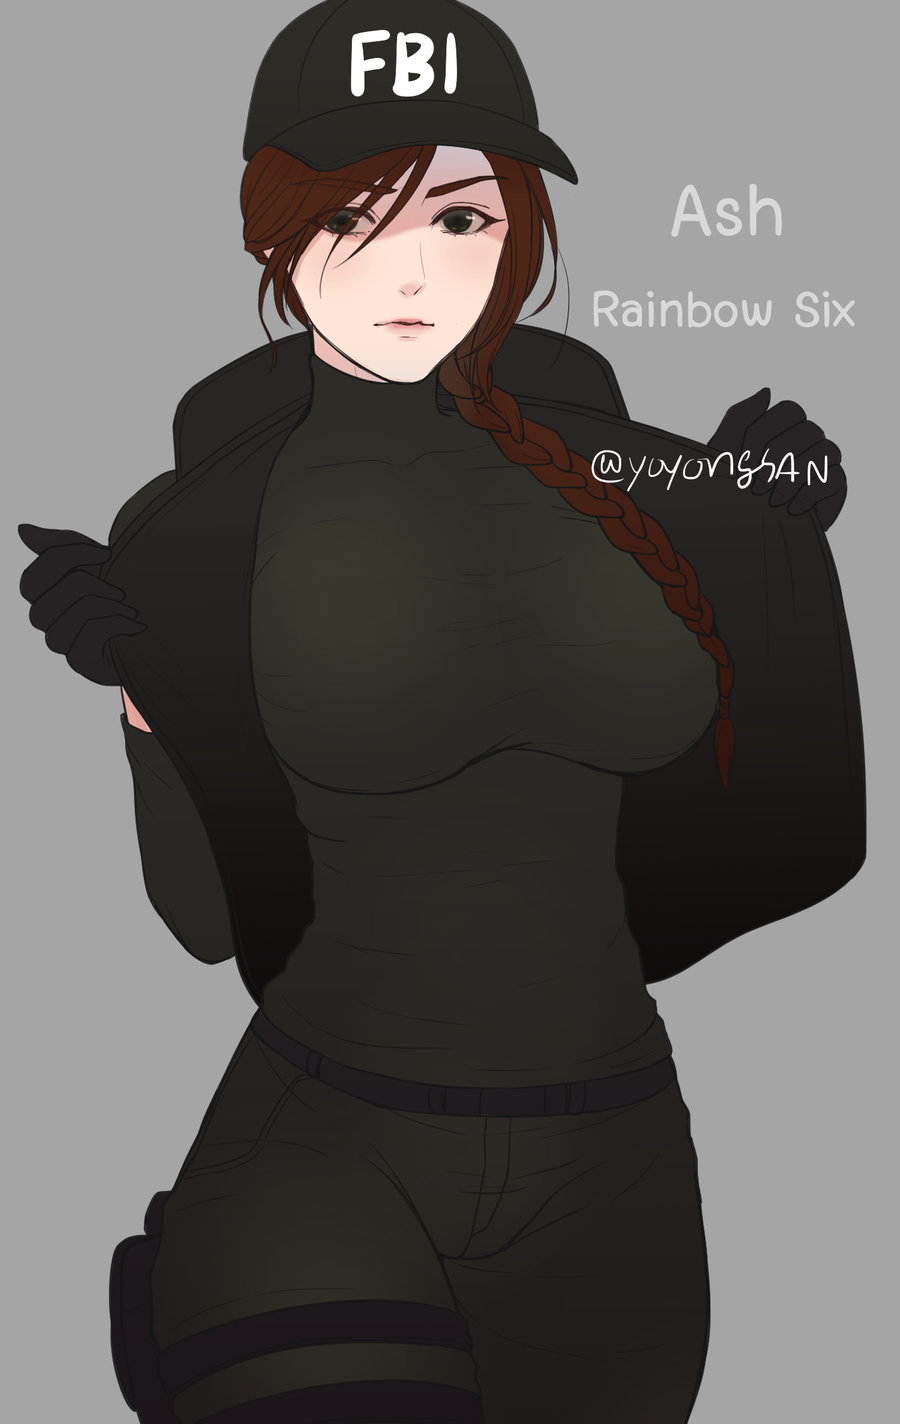 Ash rainbow six elite skin